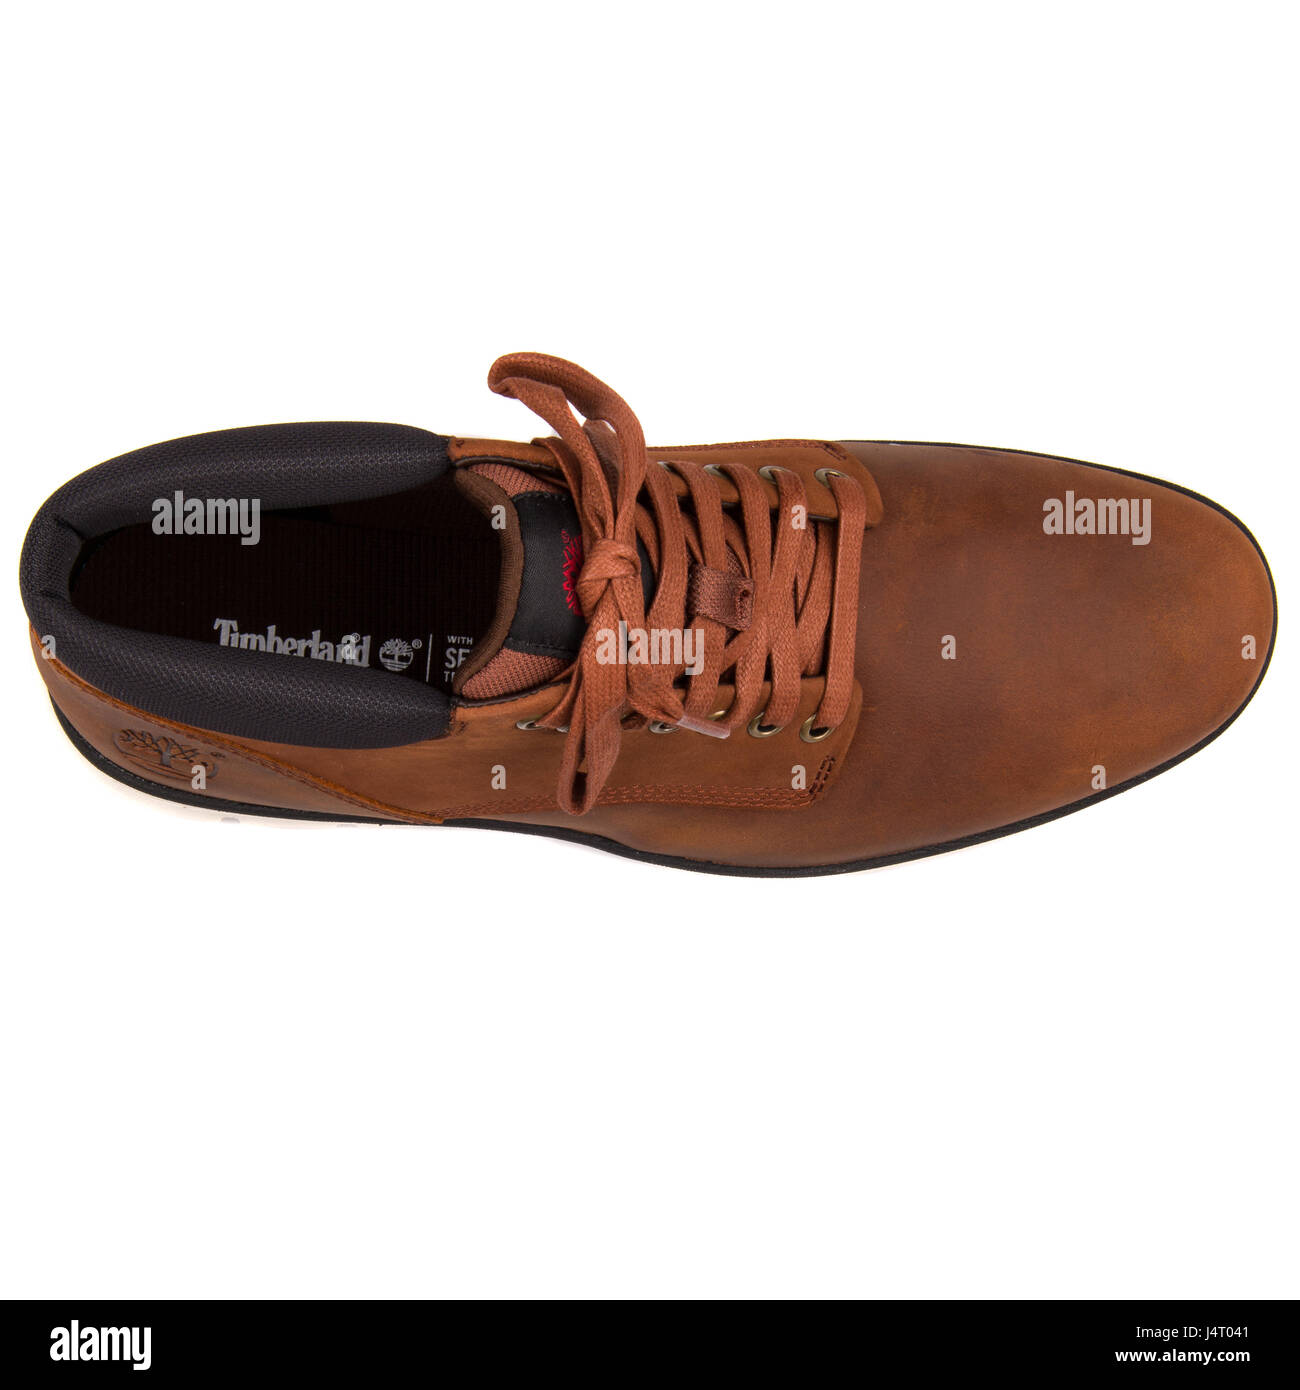 Timberland Chukka Bradstreet Brown hombres zapatos de cuero - A13EE  Fotografía de stock - Alamy